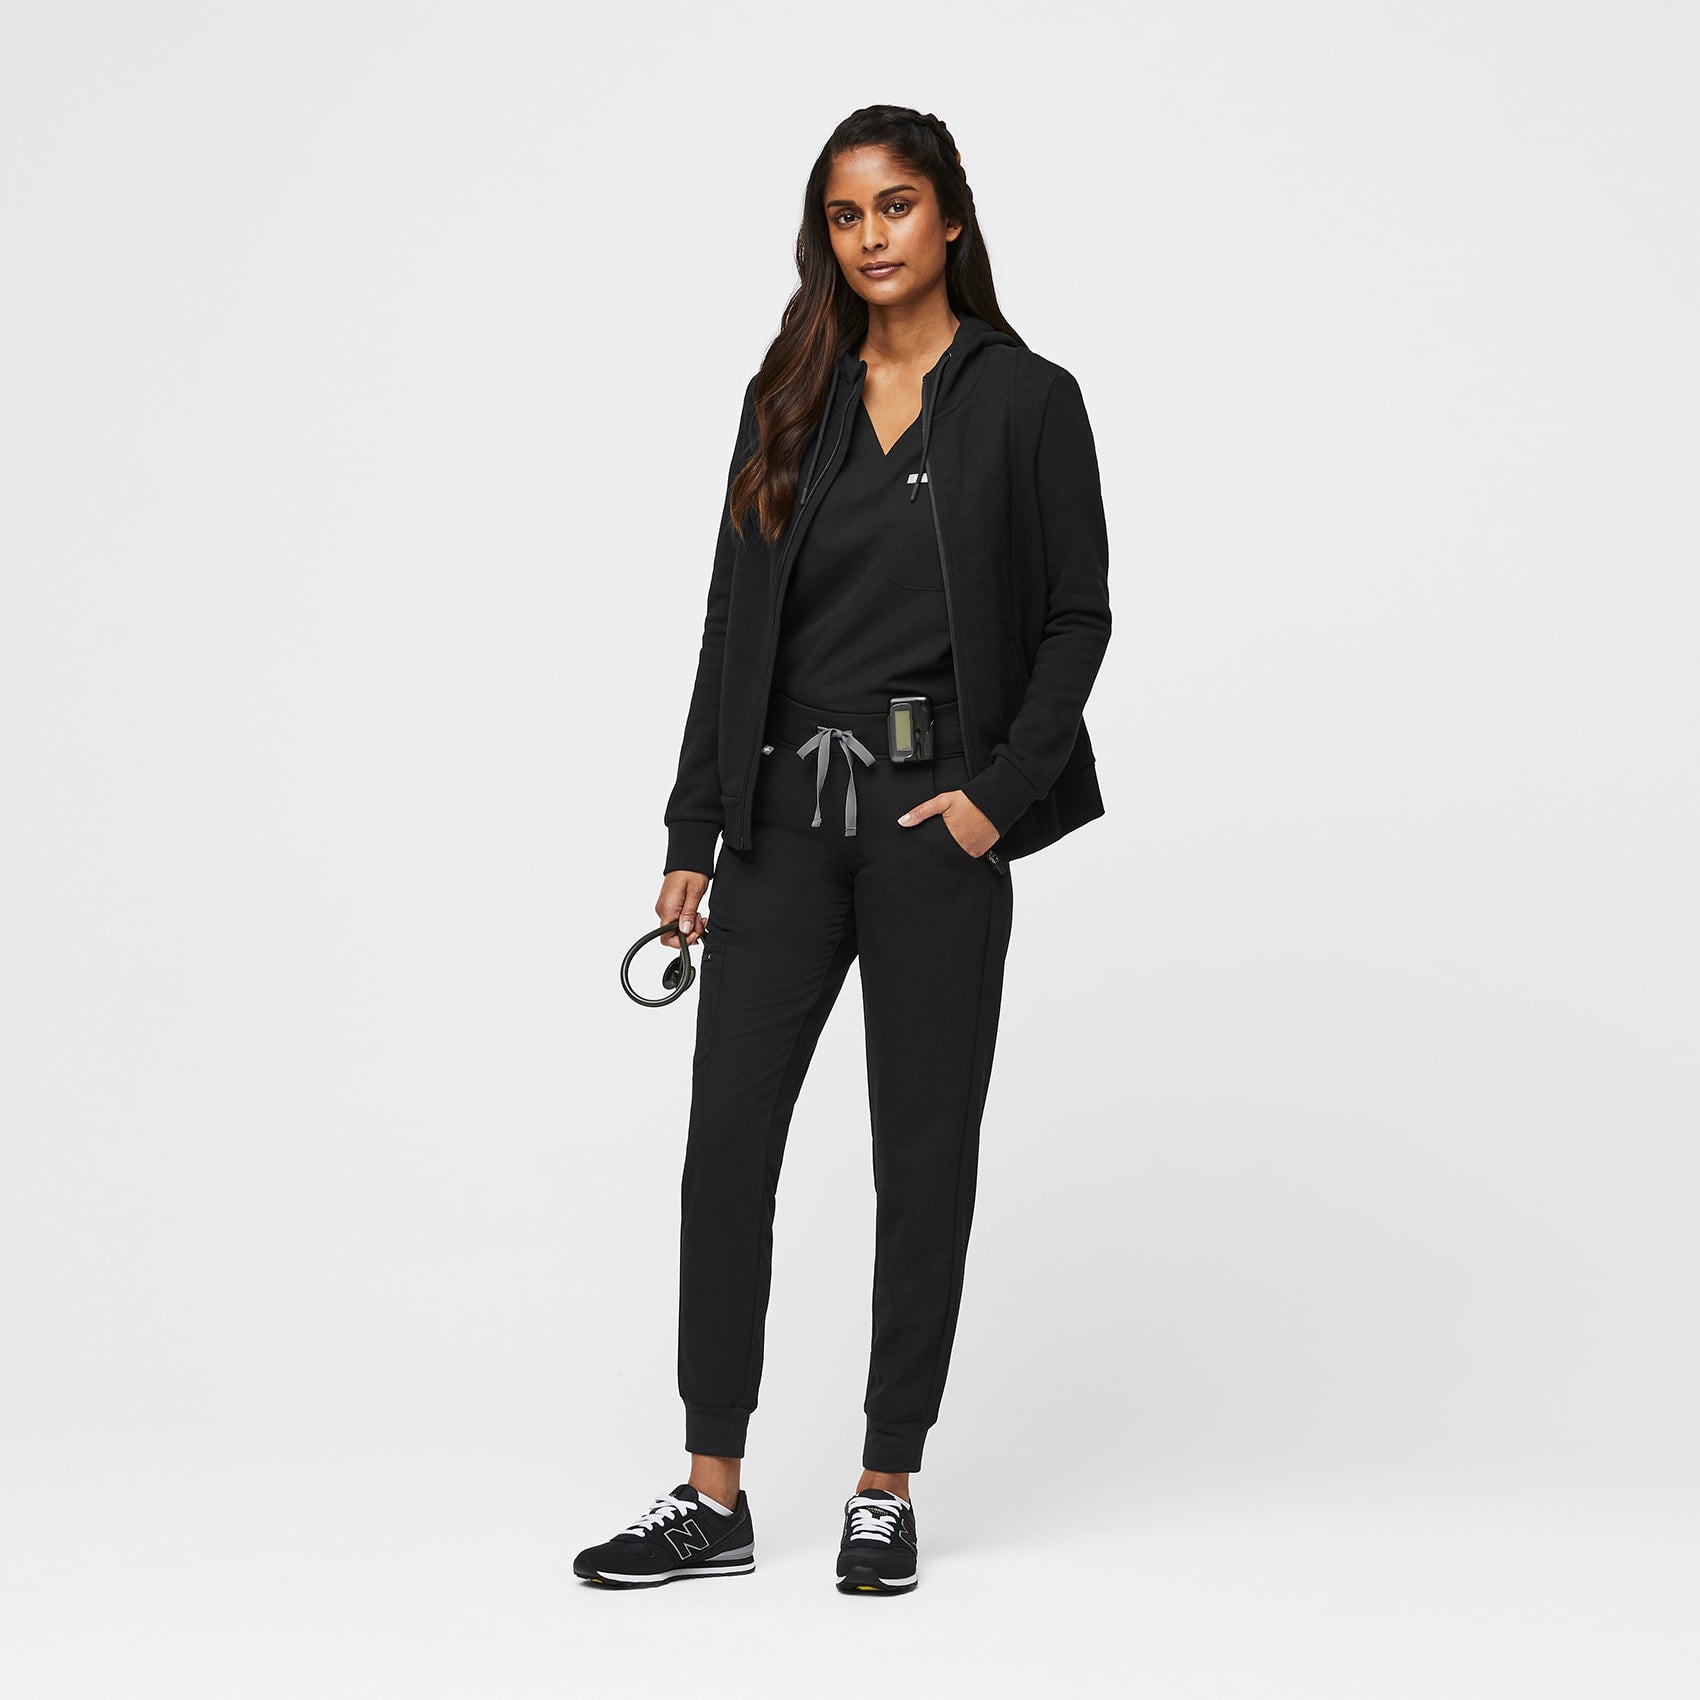 https://cdn.shopify.com/s/files/1/0139/8942/products/Women-Loungewear-Hoodie-Black-XS-2.jpg?v=1664915233